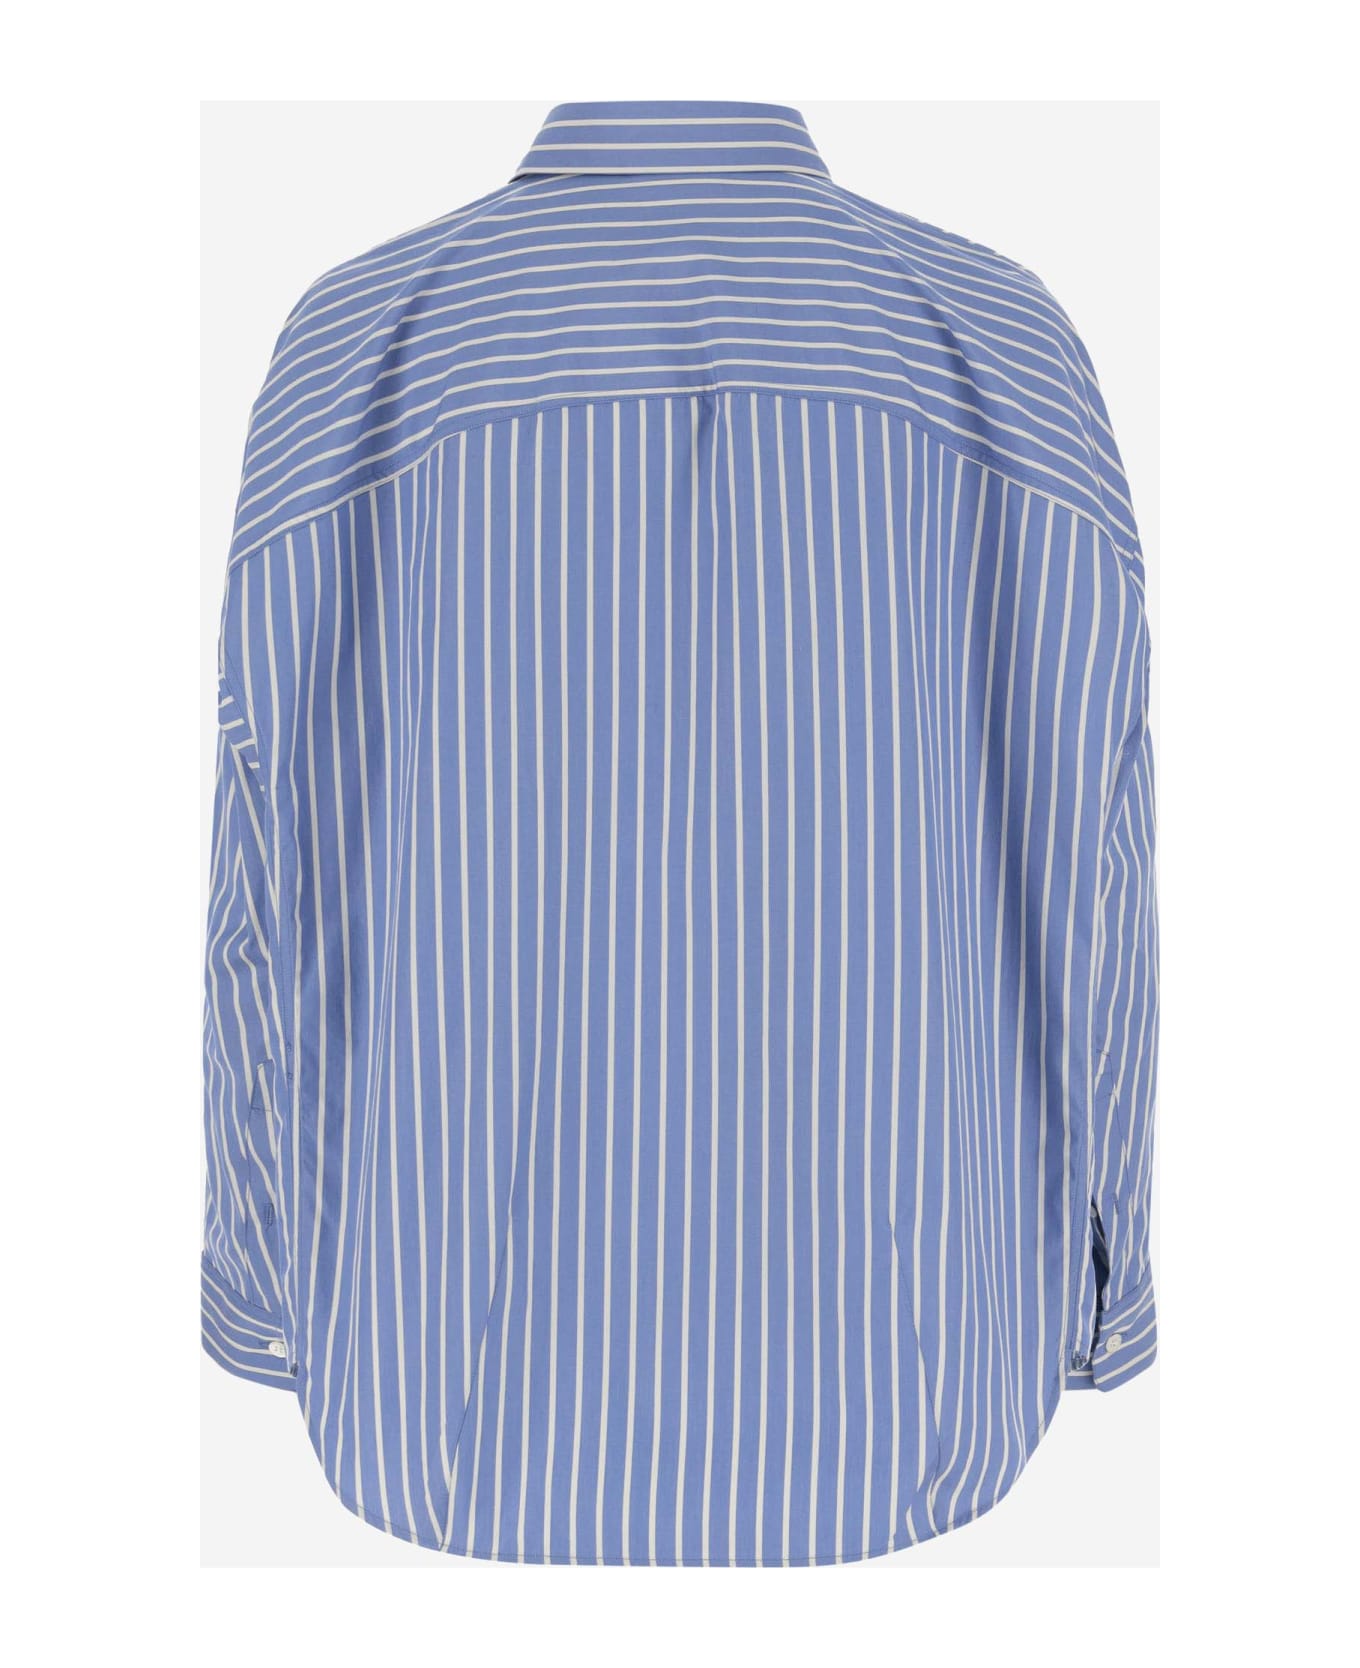 Dries Van Noten Cotton Shirt With Striped Pattern - Red